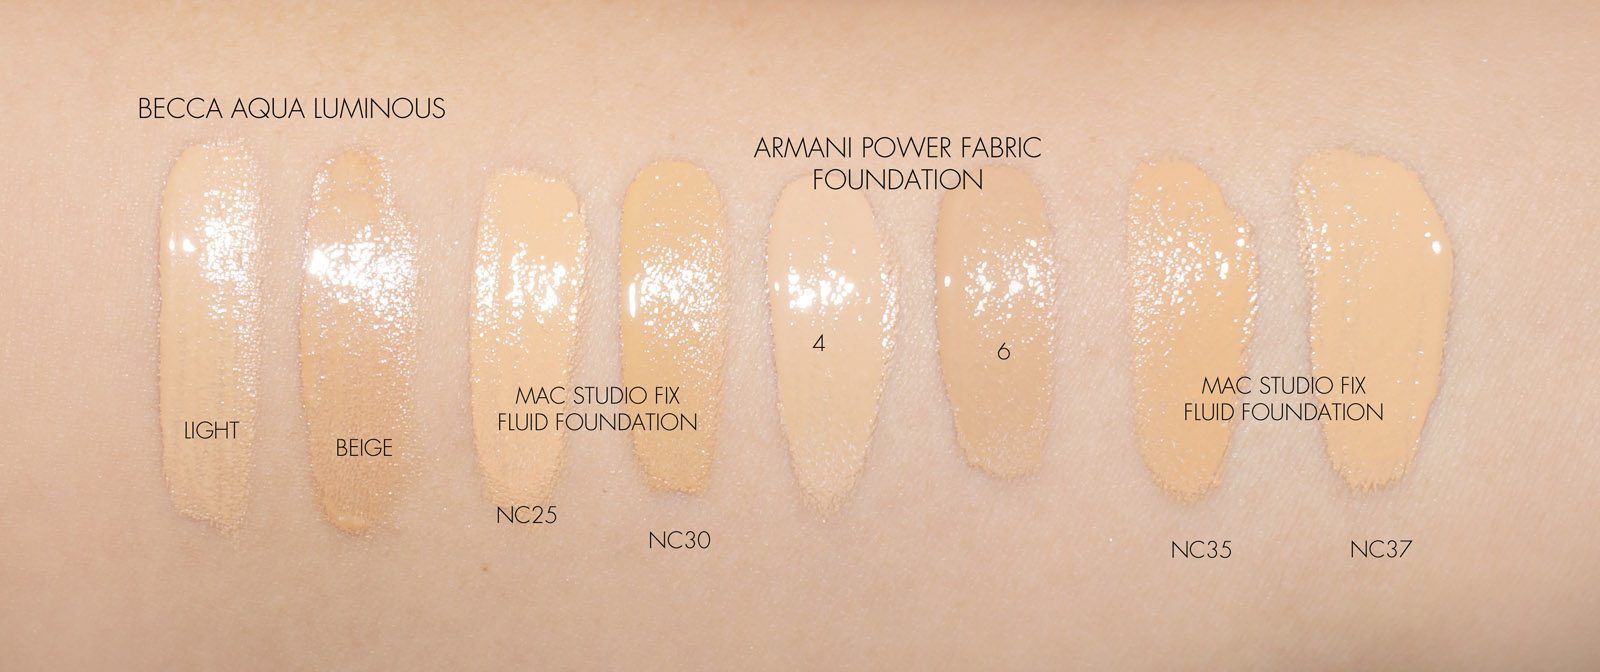 armani power fabric 4